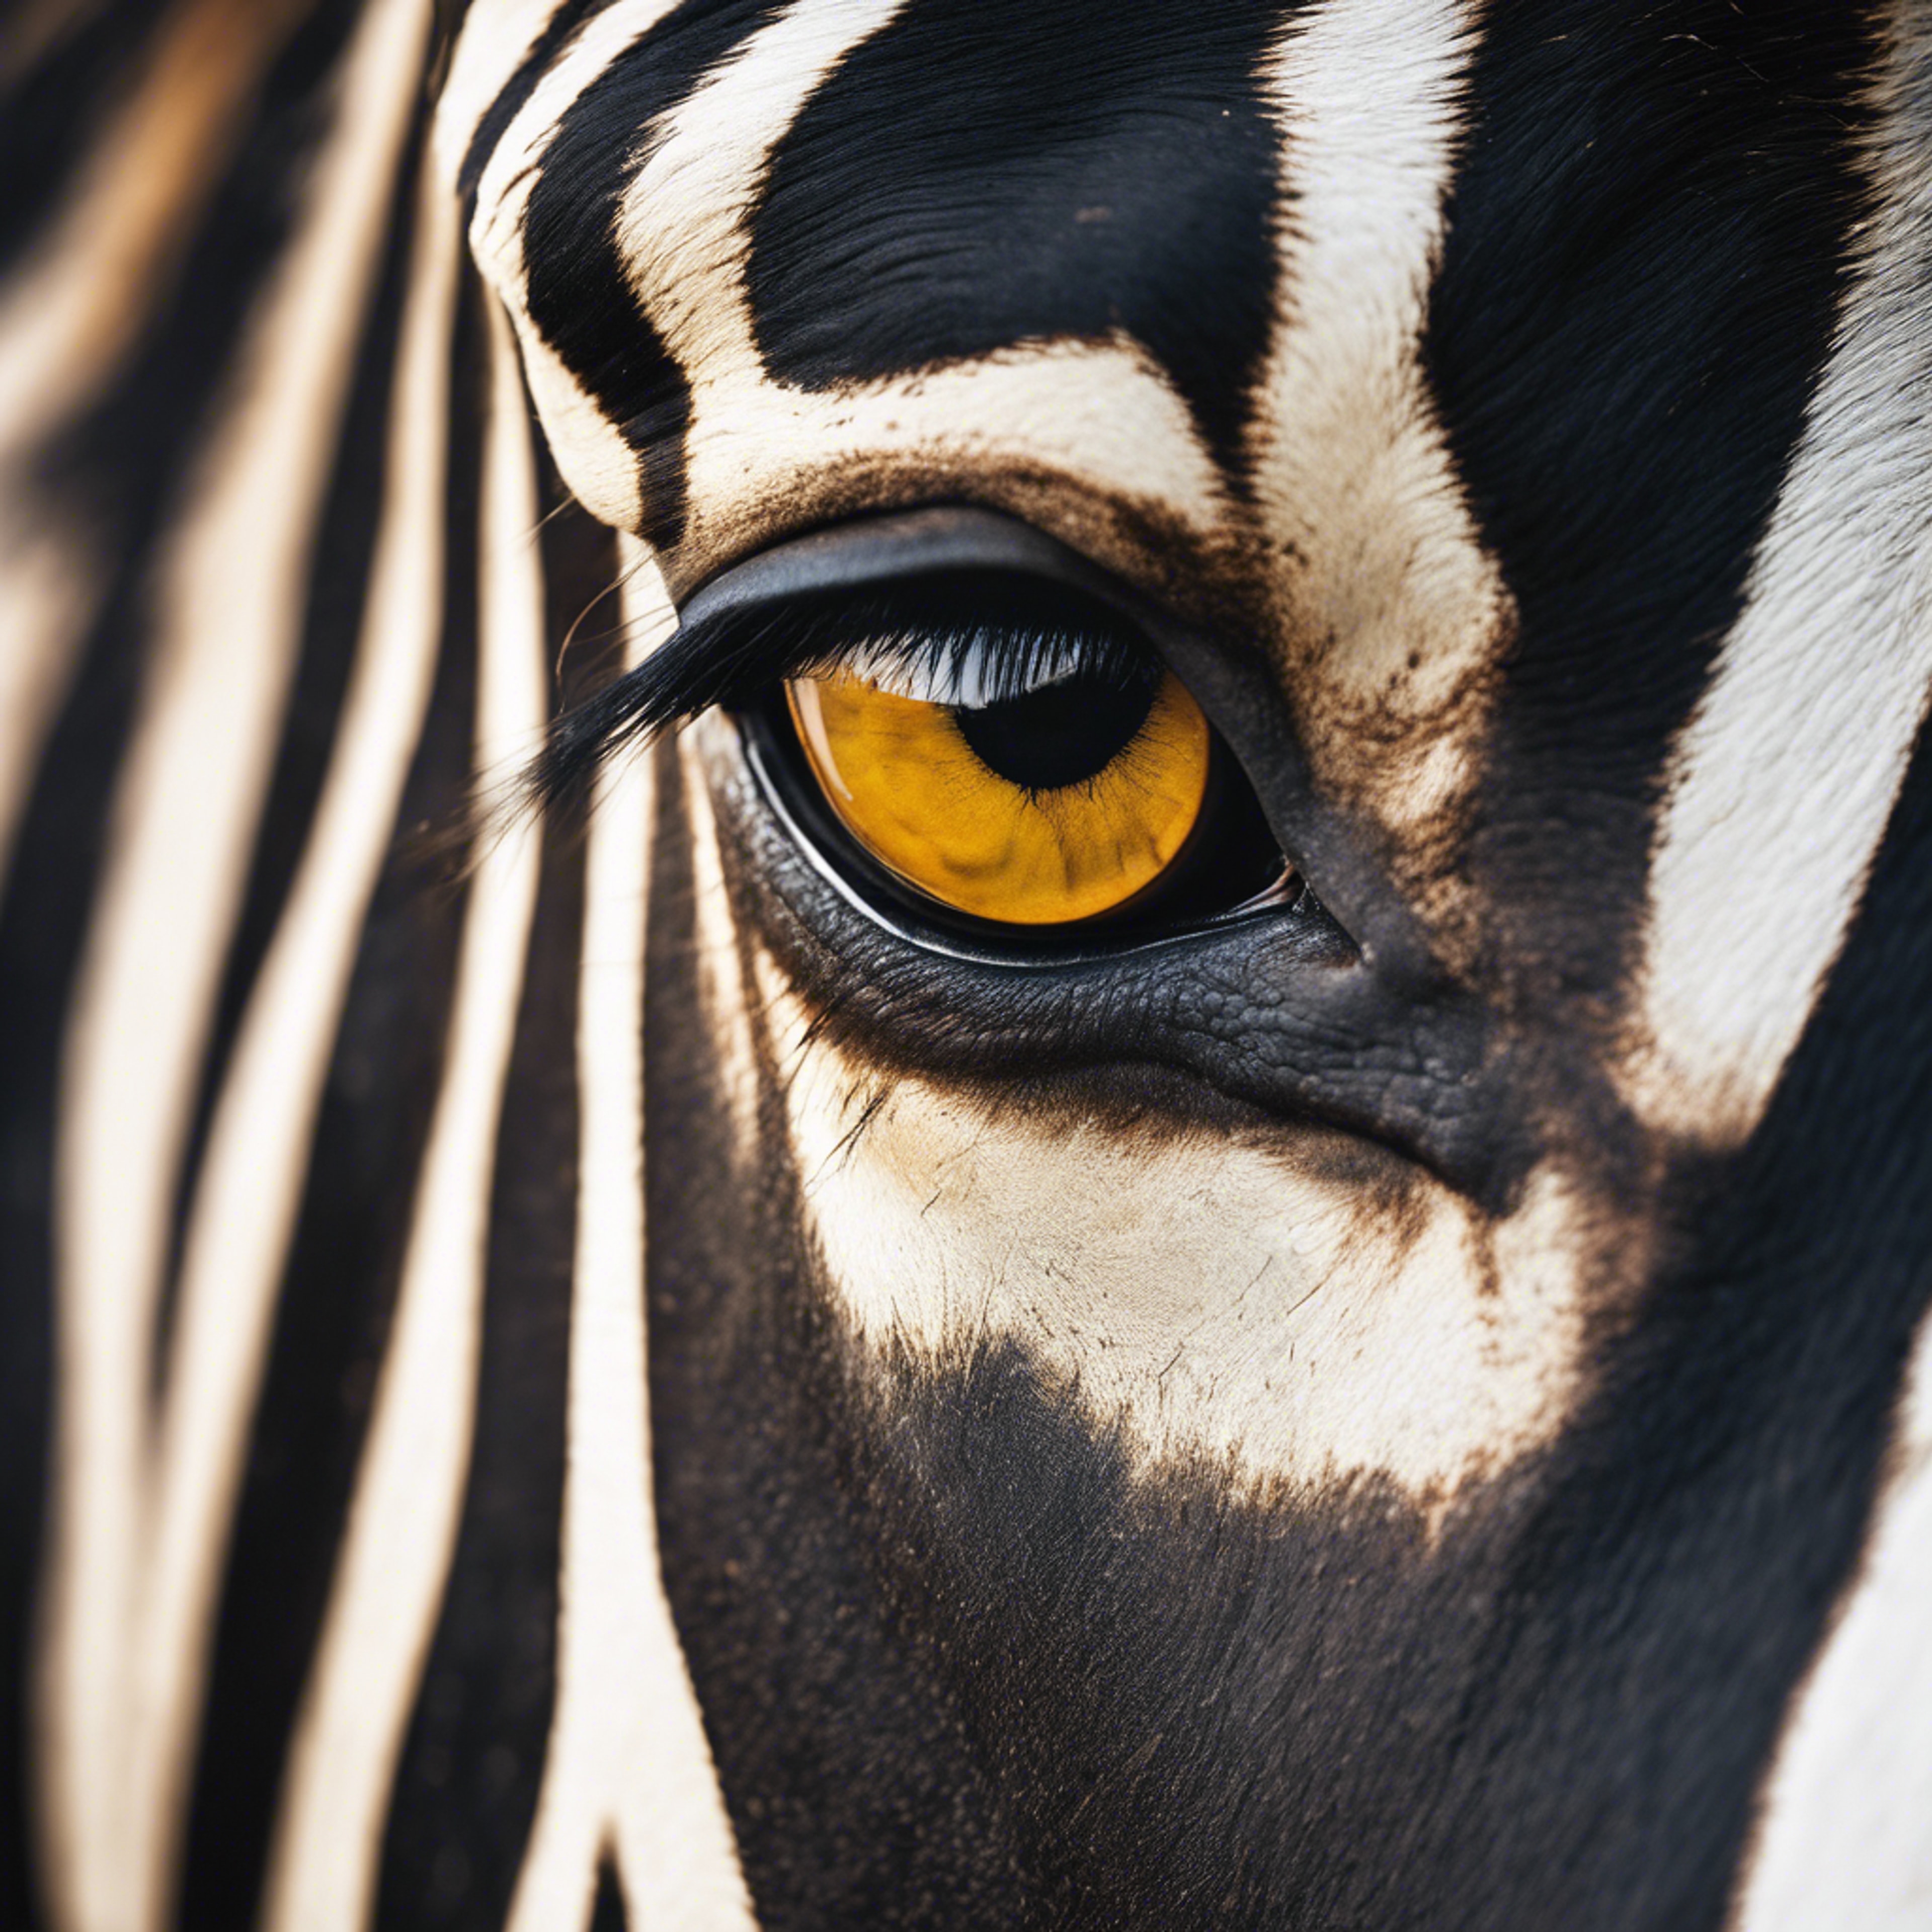 A closeup of a zebra's eye, showcasing its beautiful black and yellow striped pattern. Wallpaper[50ee4a2668b0446d82c3]